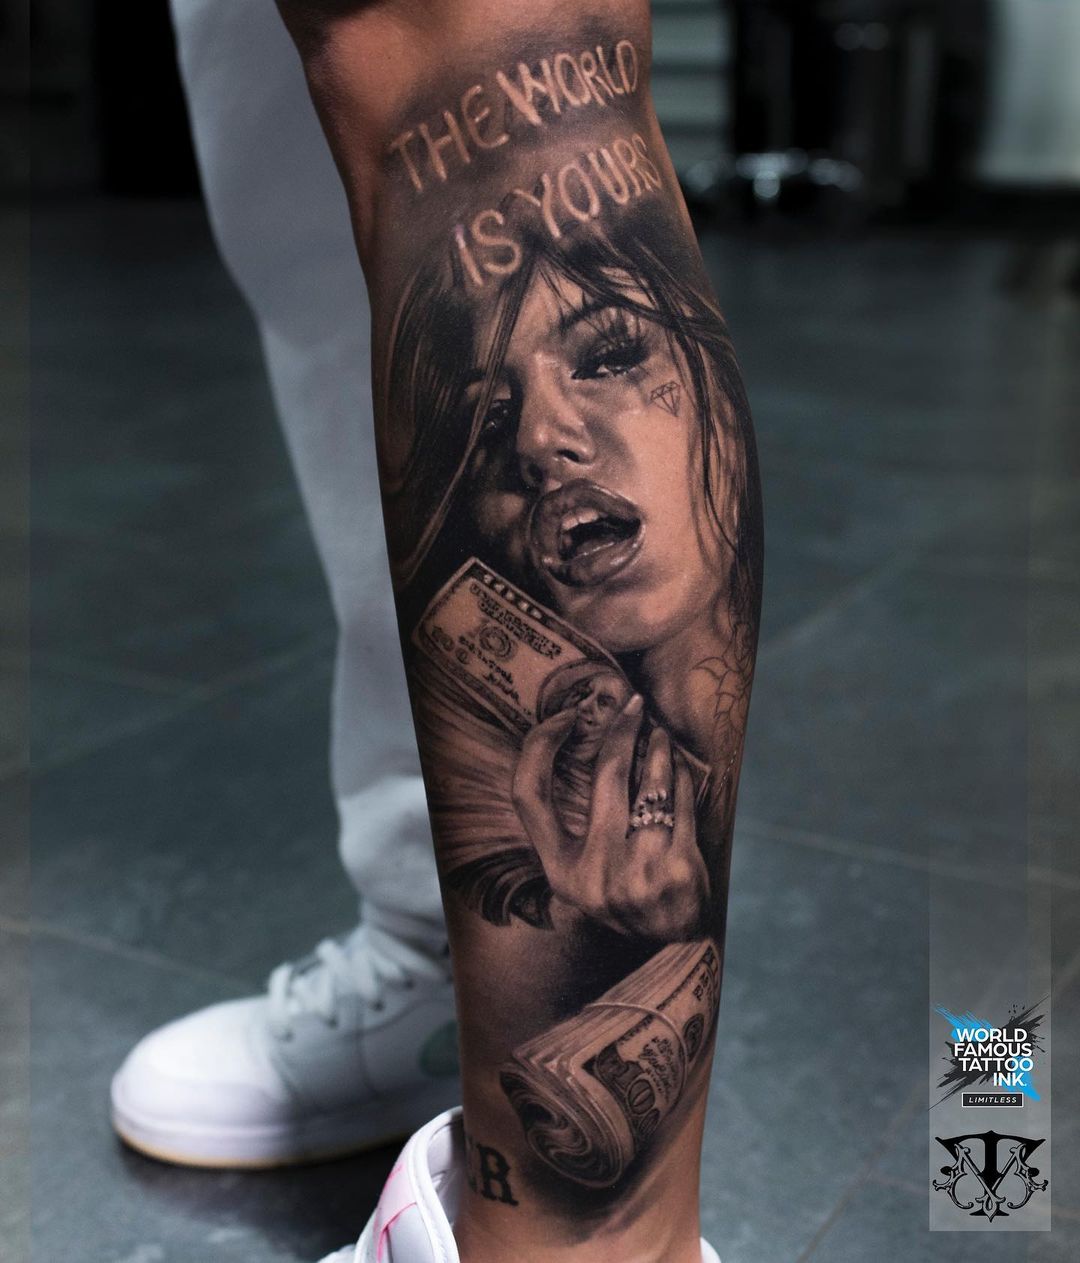 Killer Ink Tattoo on X: International black and grey artist